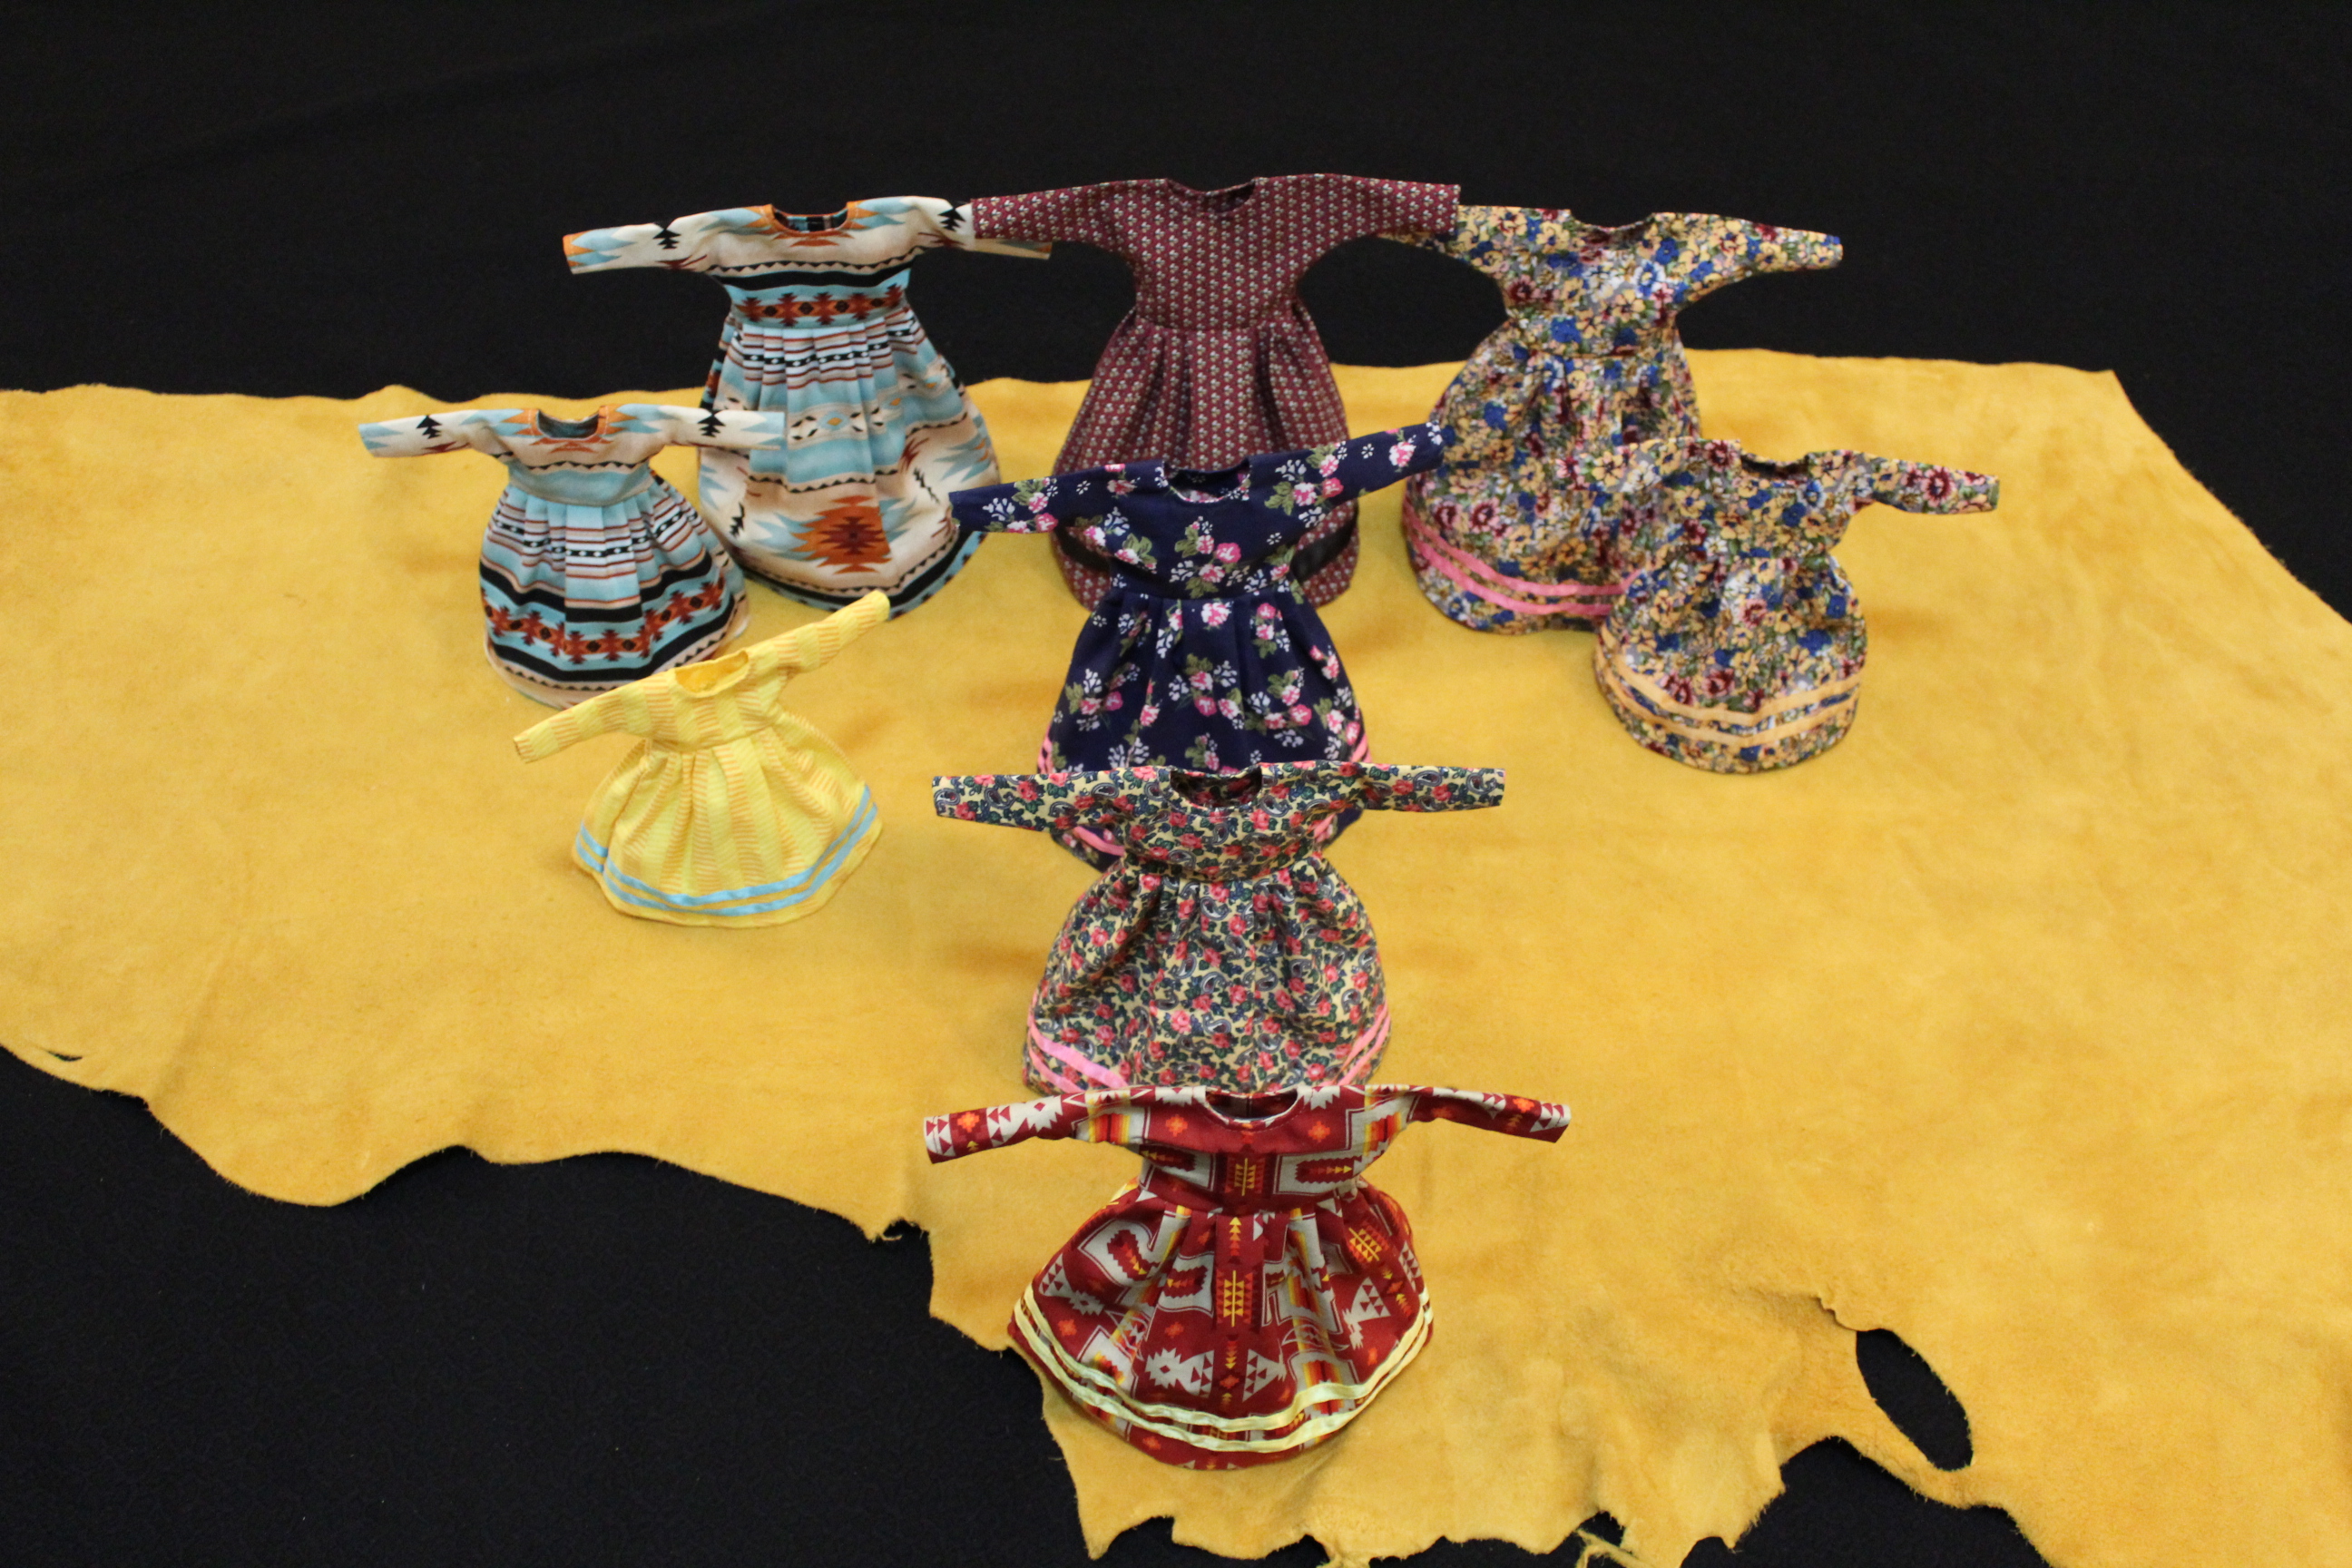 Several miniature Blackfoot dresses